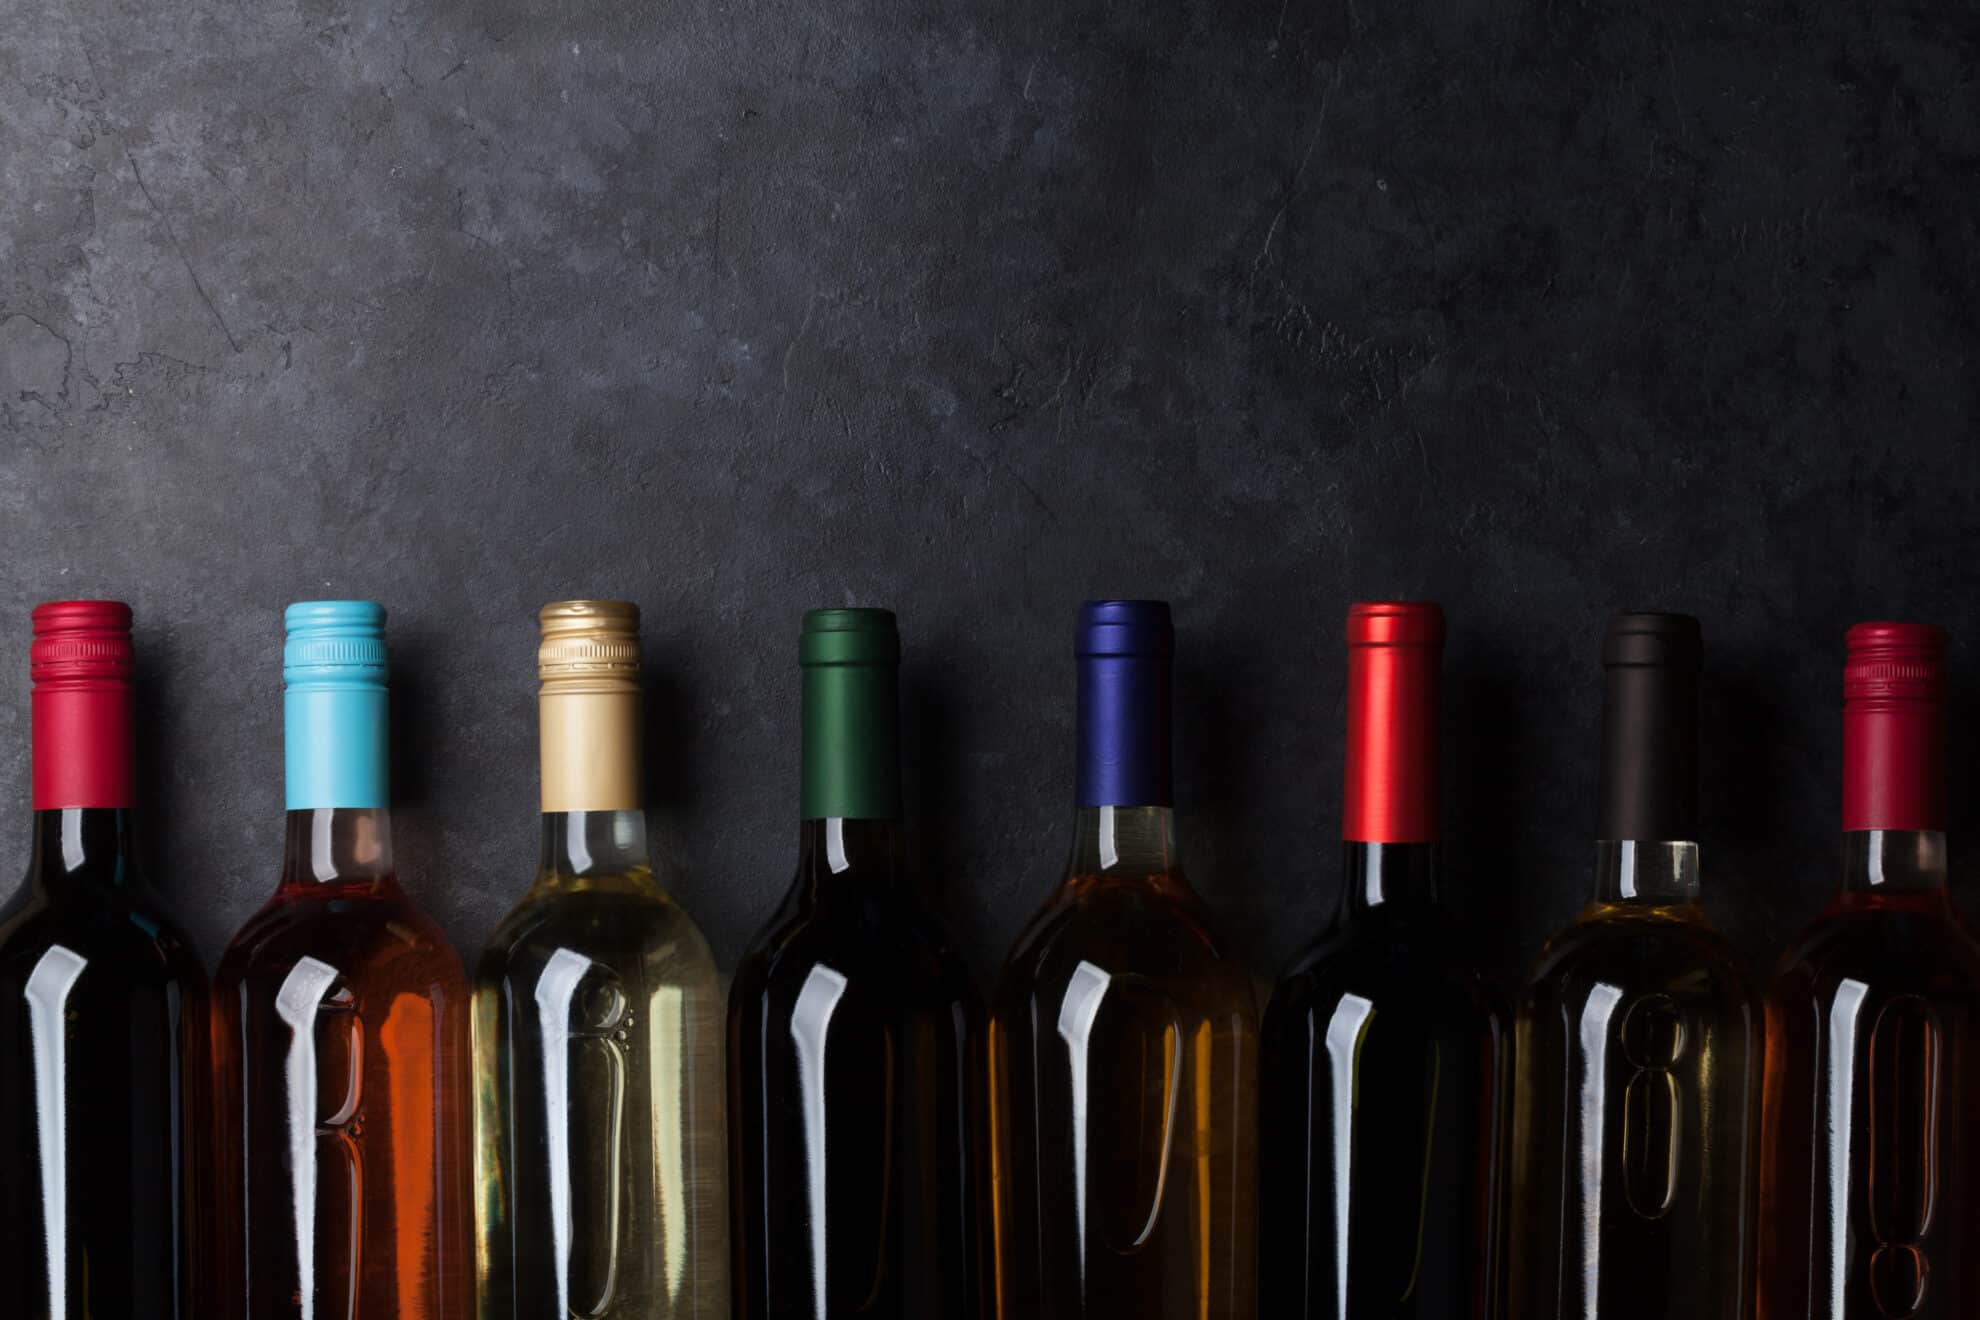  Avoid Wasting Leftover Wine